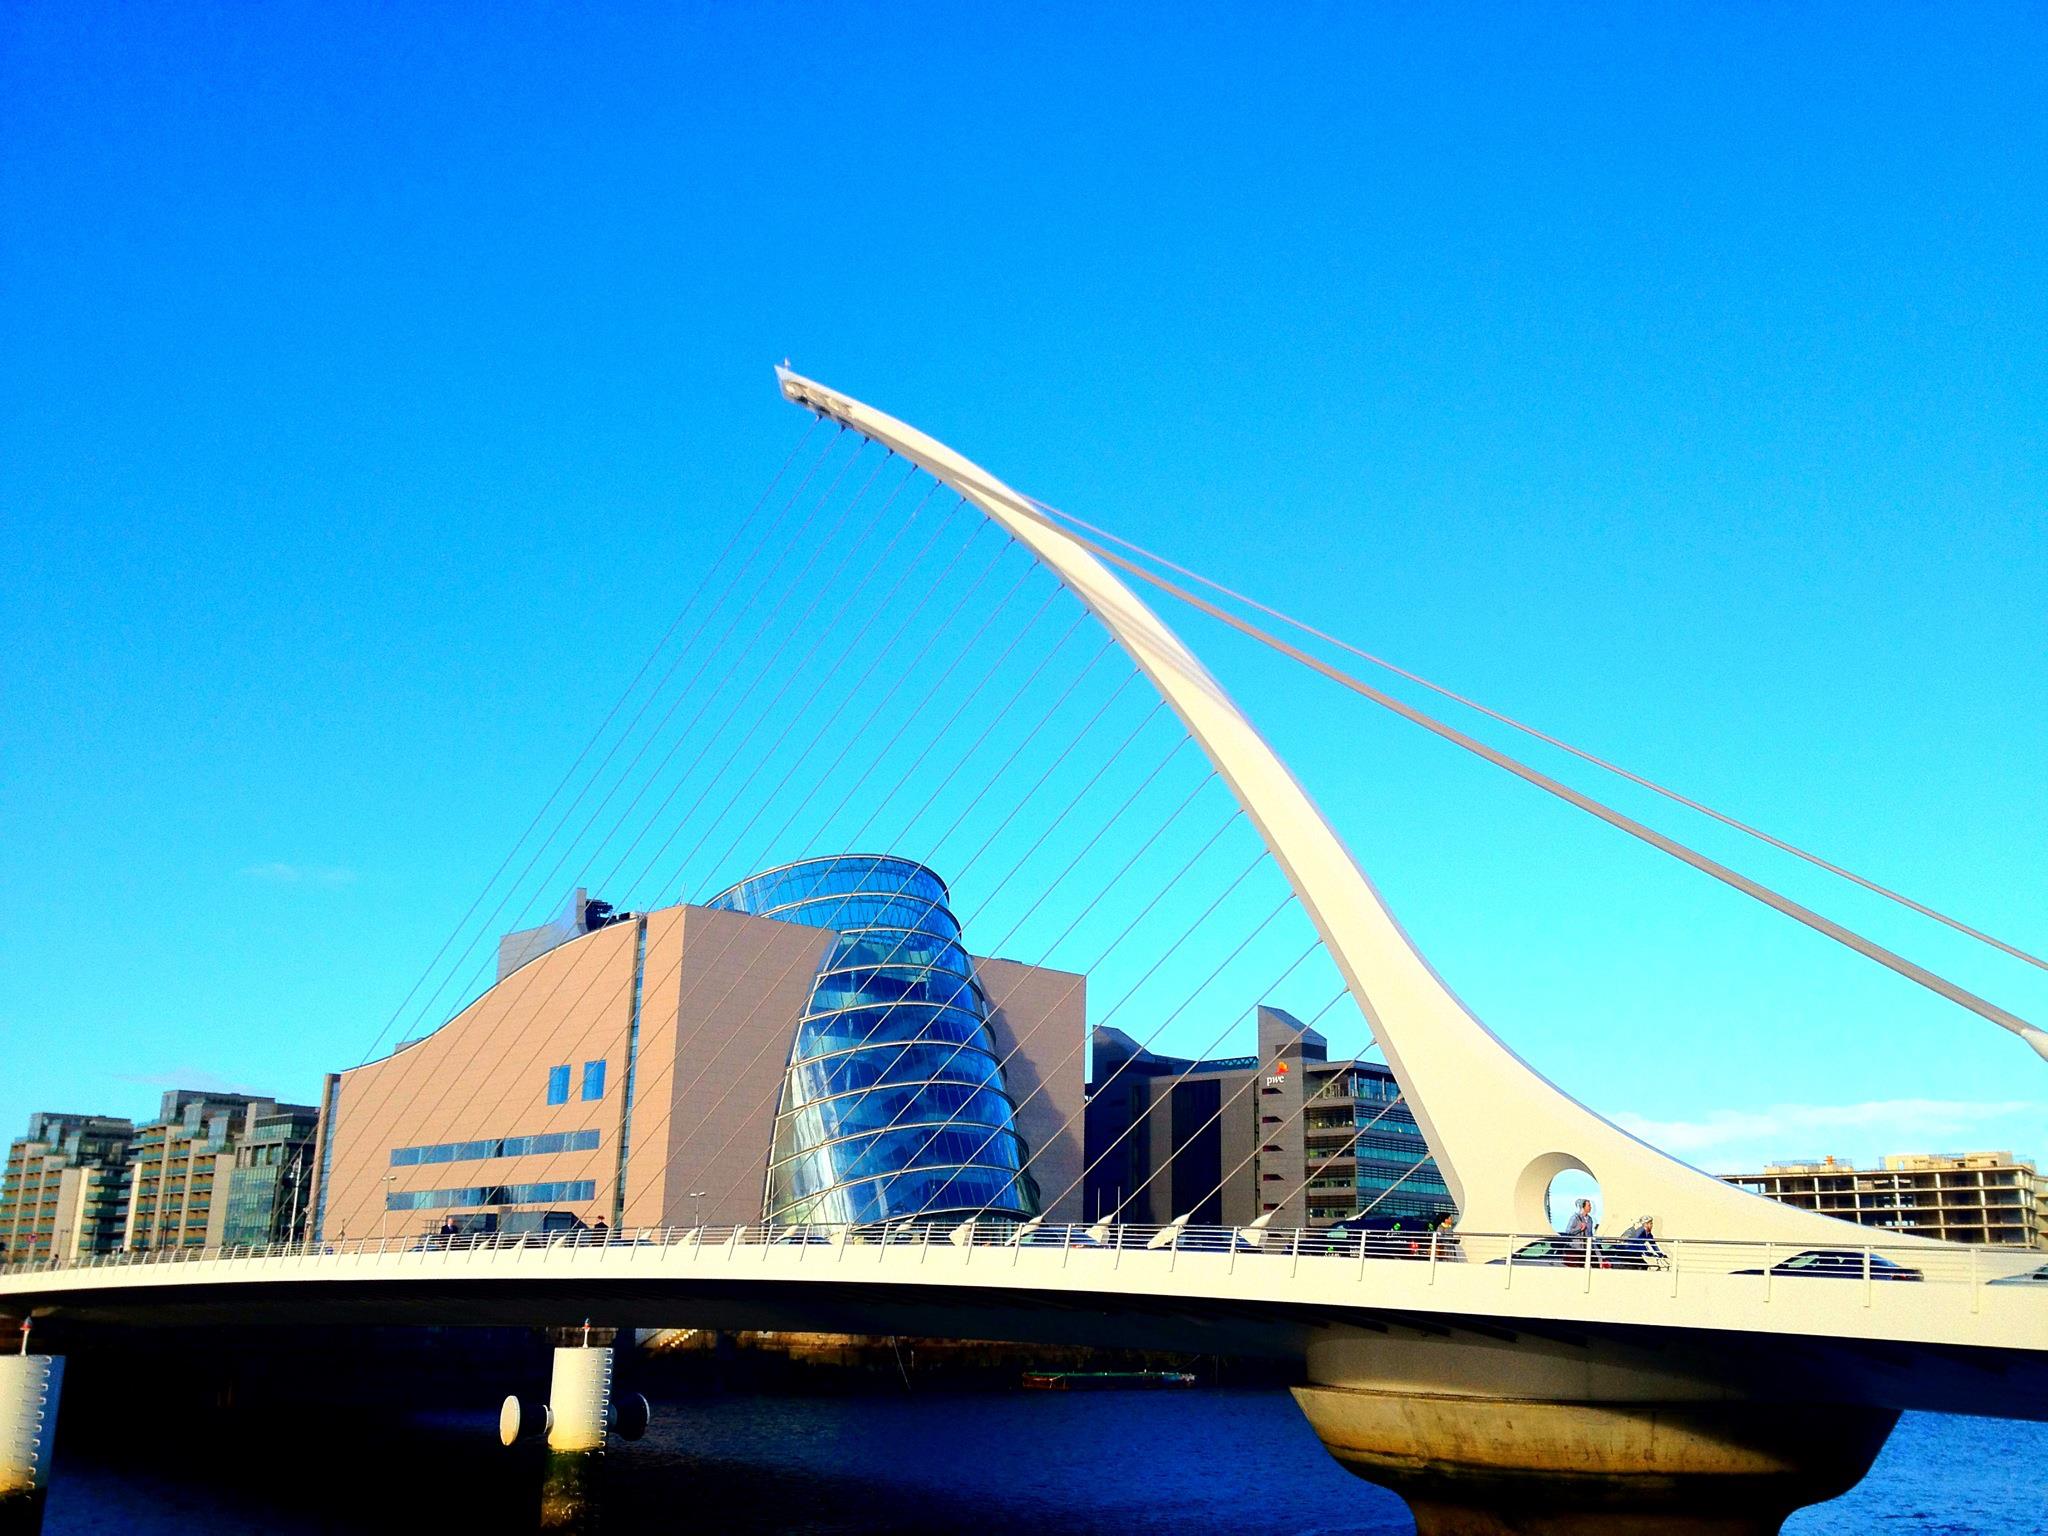 Samuel Beckett Bridge, Dublin (ダブリン), Ireland 🇮🇪